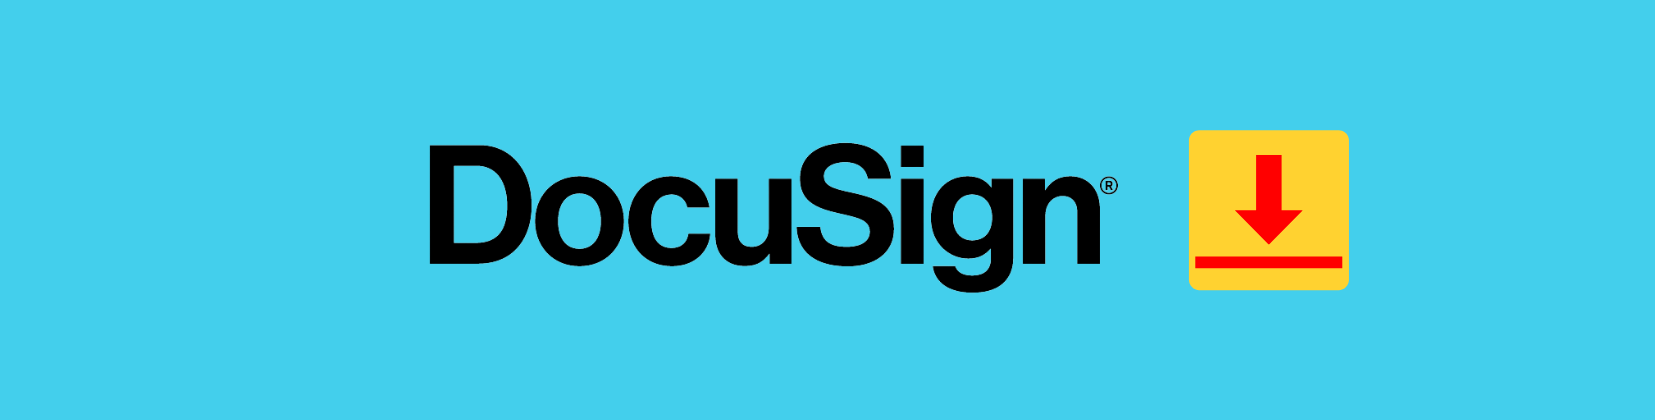 Docusign Software Banner